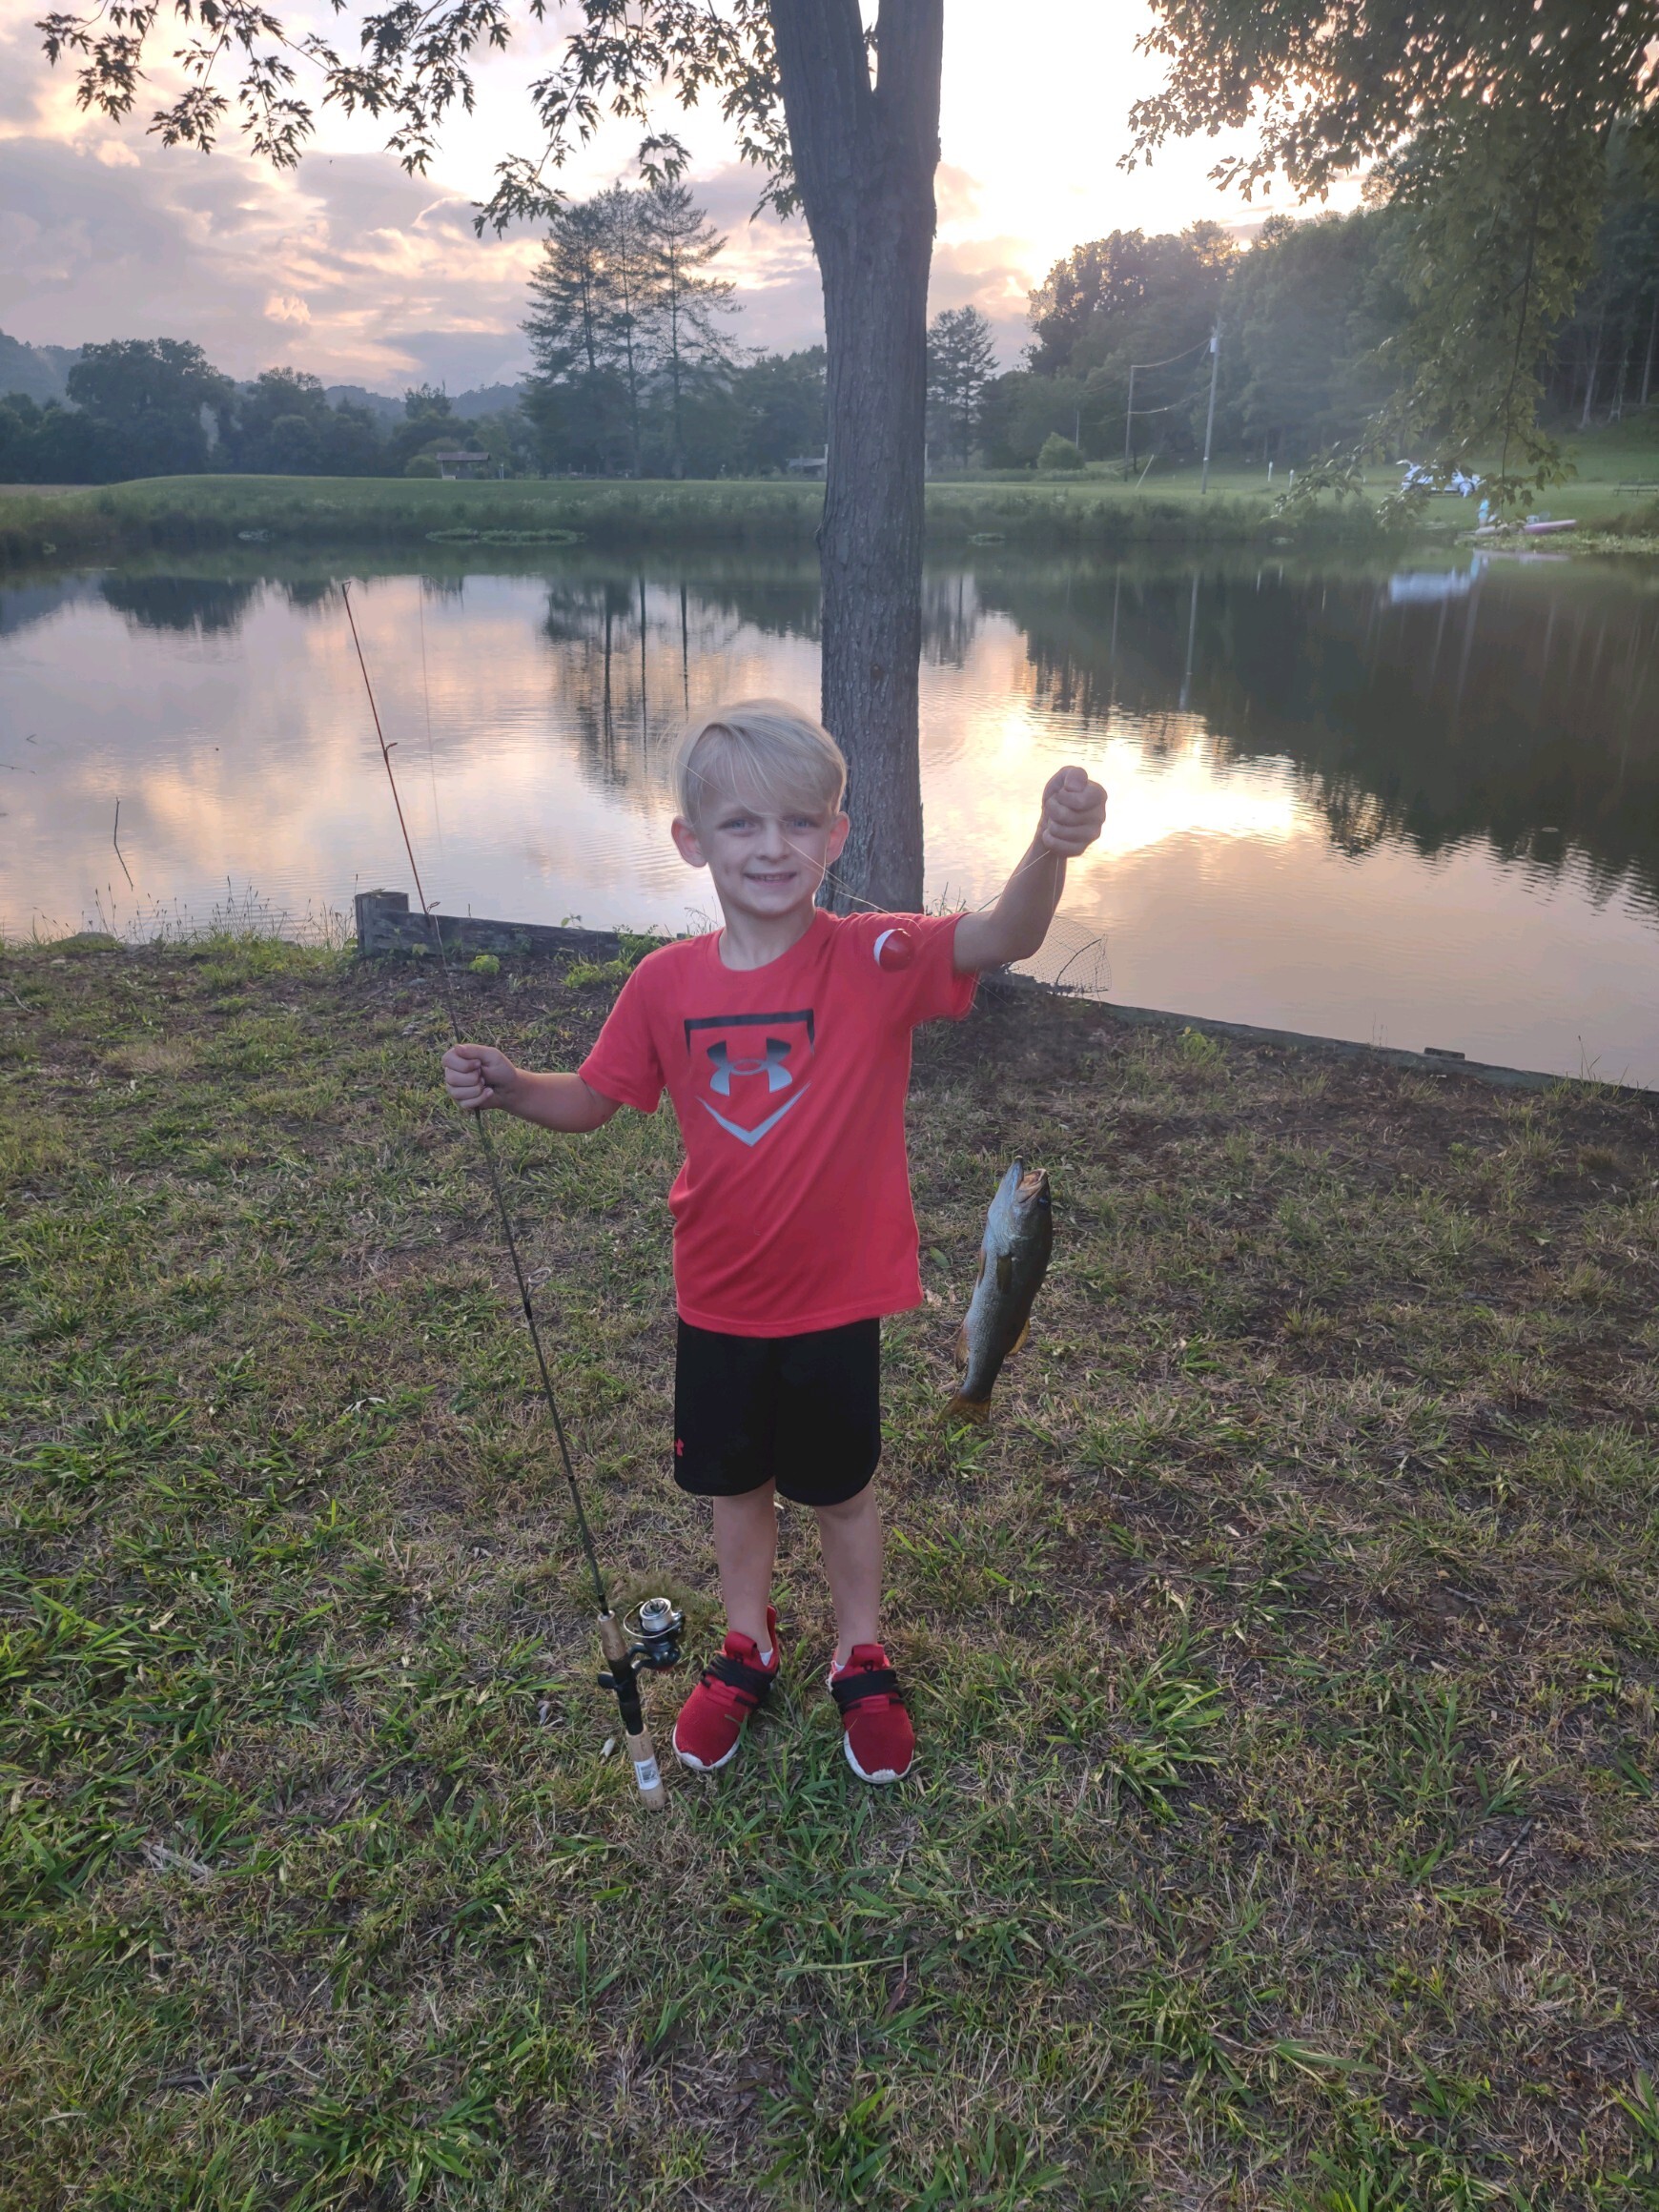 Deerwoode Reserve | Young boy, fishing rod, lake.